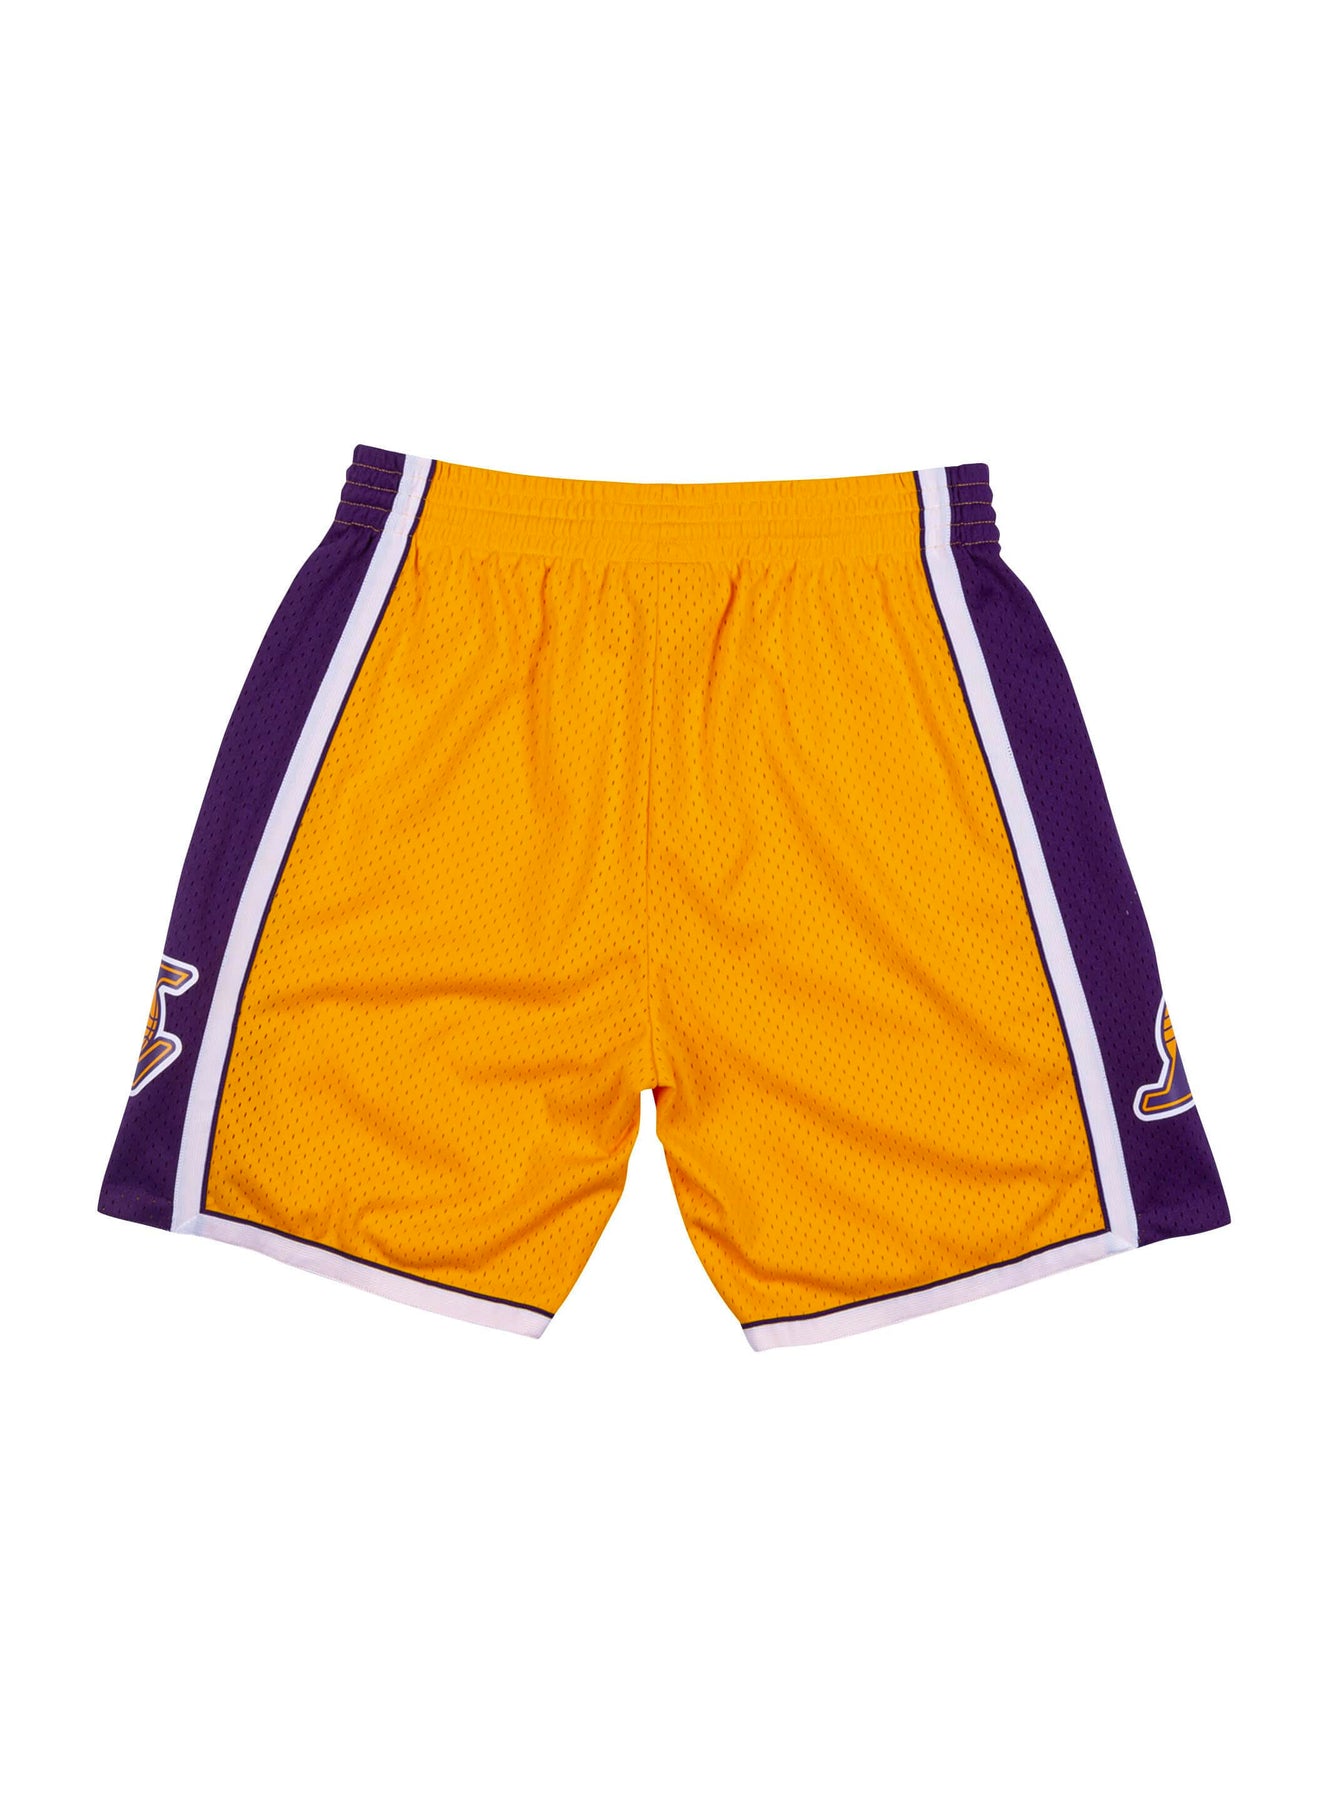 Mitchell & Ness NBA 75th Anniversary Lakers Swingman Shorts 2XL